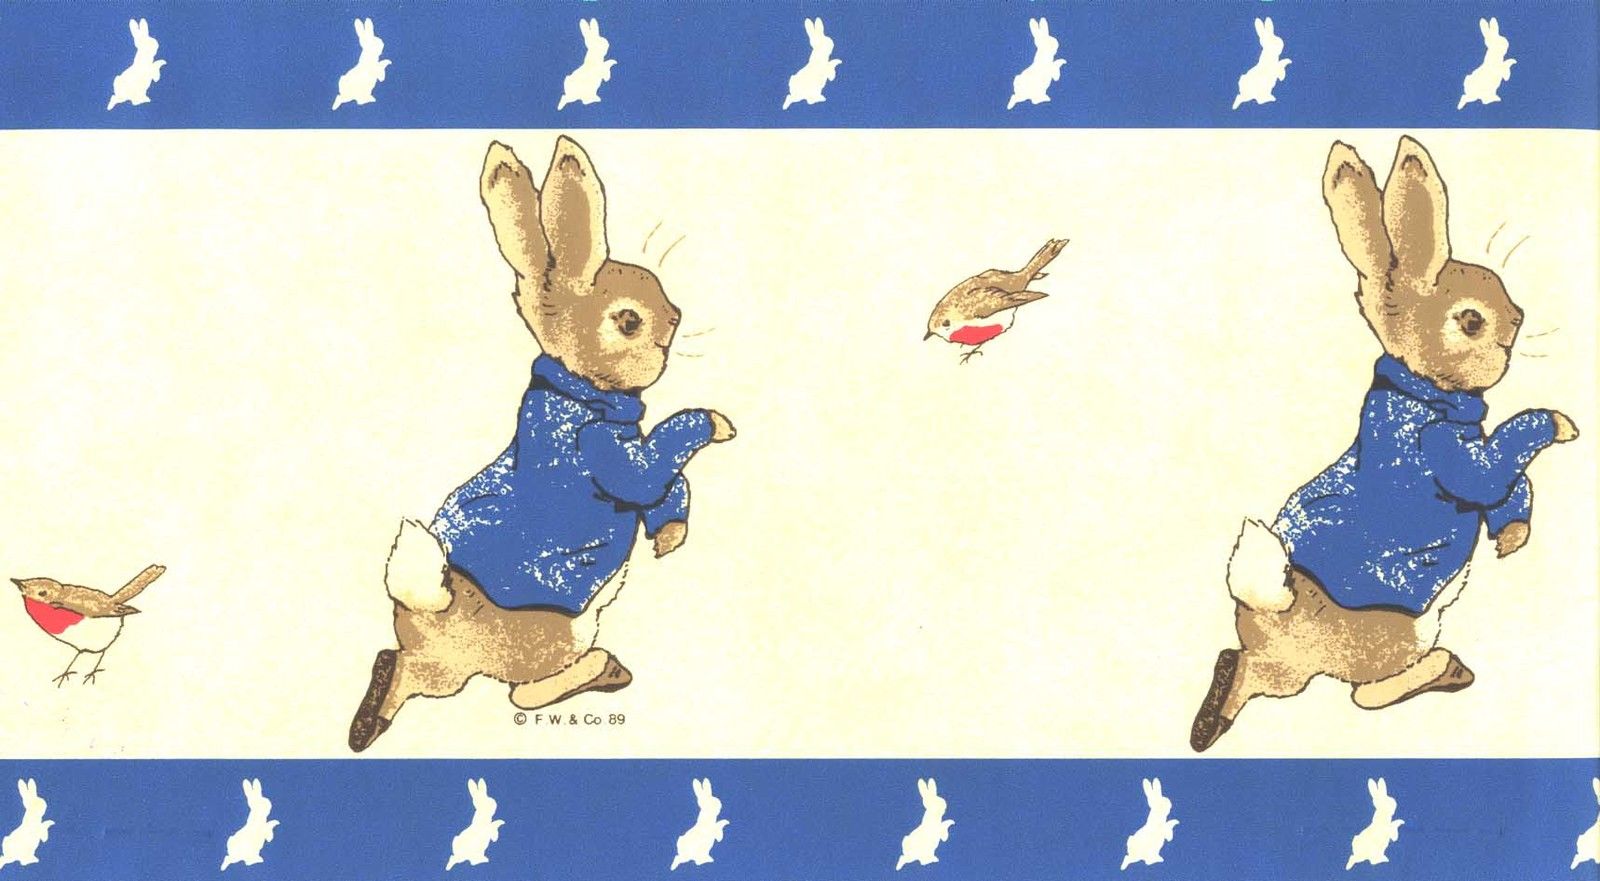 Potter The Tale Of Peter Rabbit Wallpaper Border Bpc13038w Blue